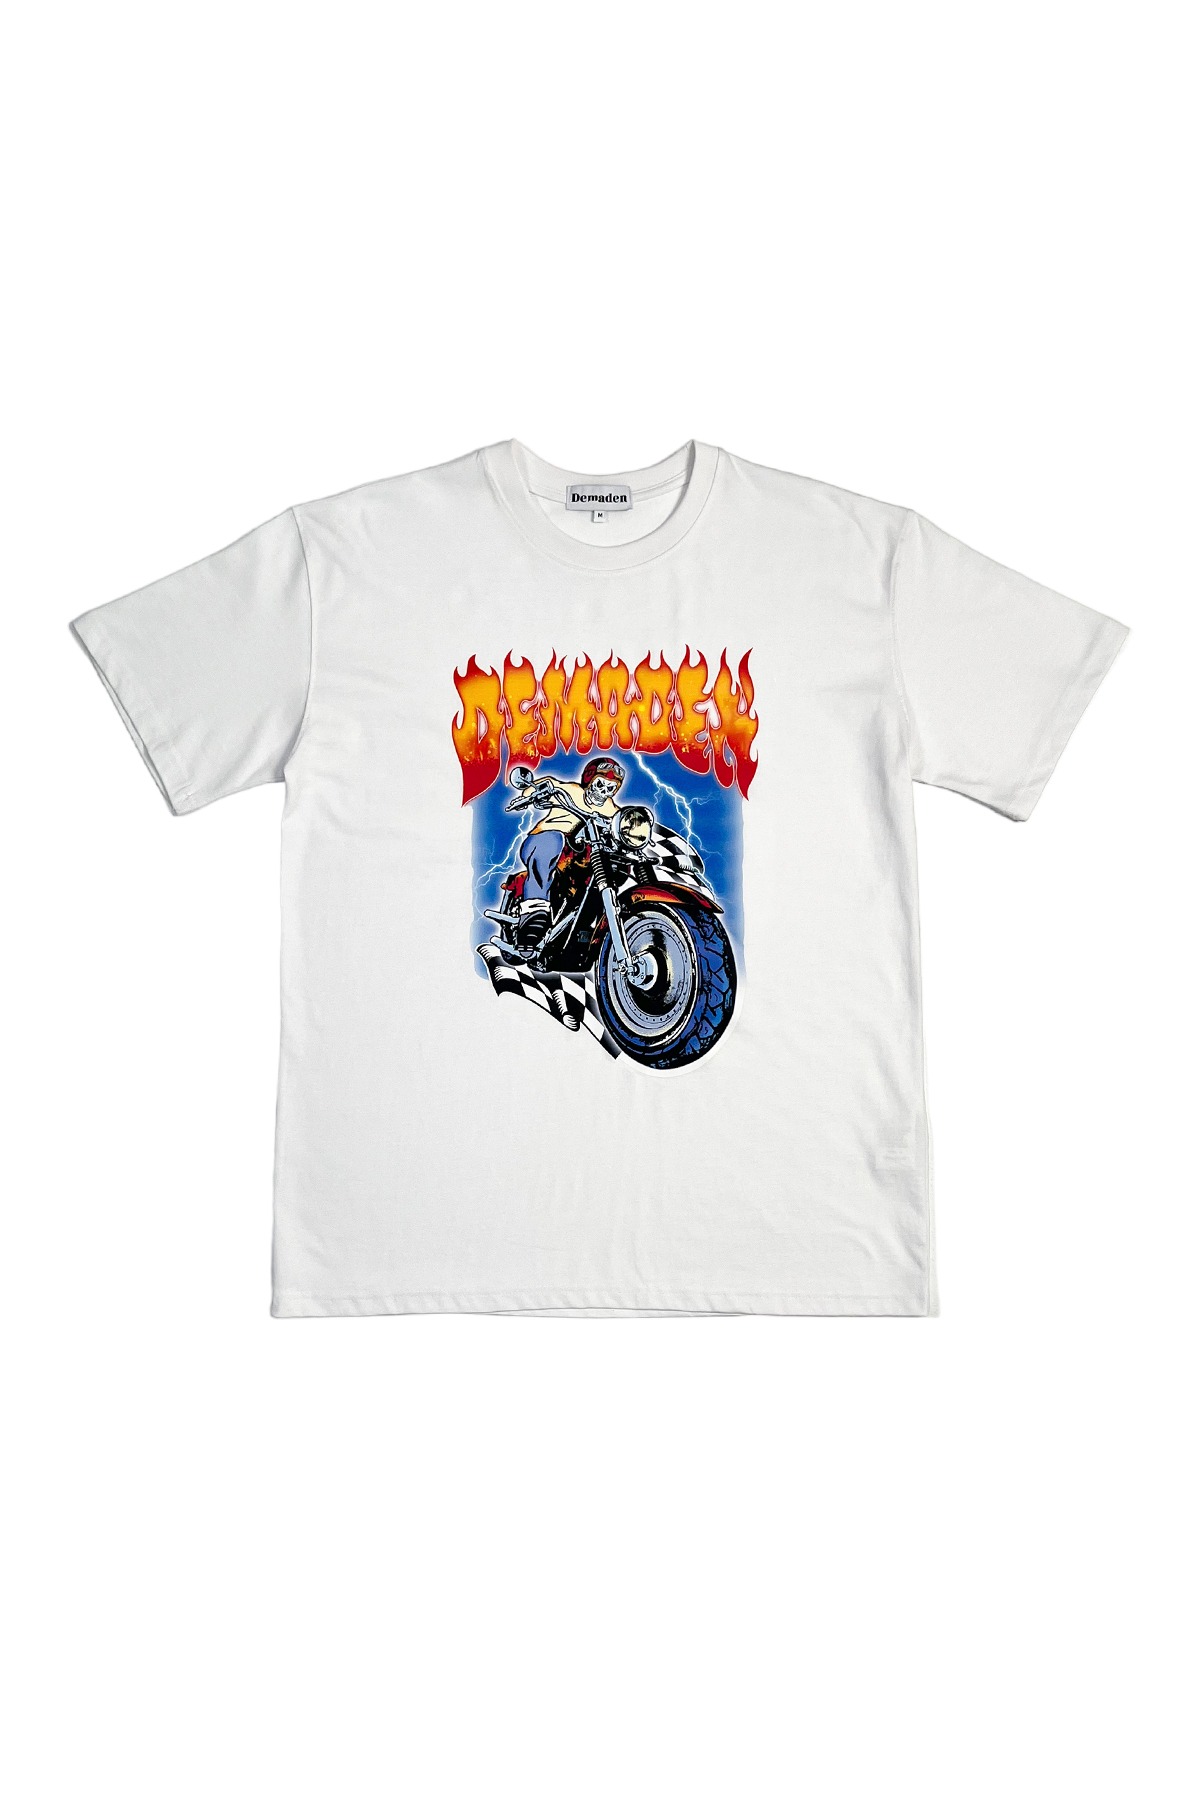 SKULL MOTORCYCLE GANG 1/2 T-SHIRT WHITE, 청바지, 데님, 가디건, 의류, 연예인, 협찬, 티셔츠, 셔츠, 반팔, 긴팔, 베스트, 조끼, 코트